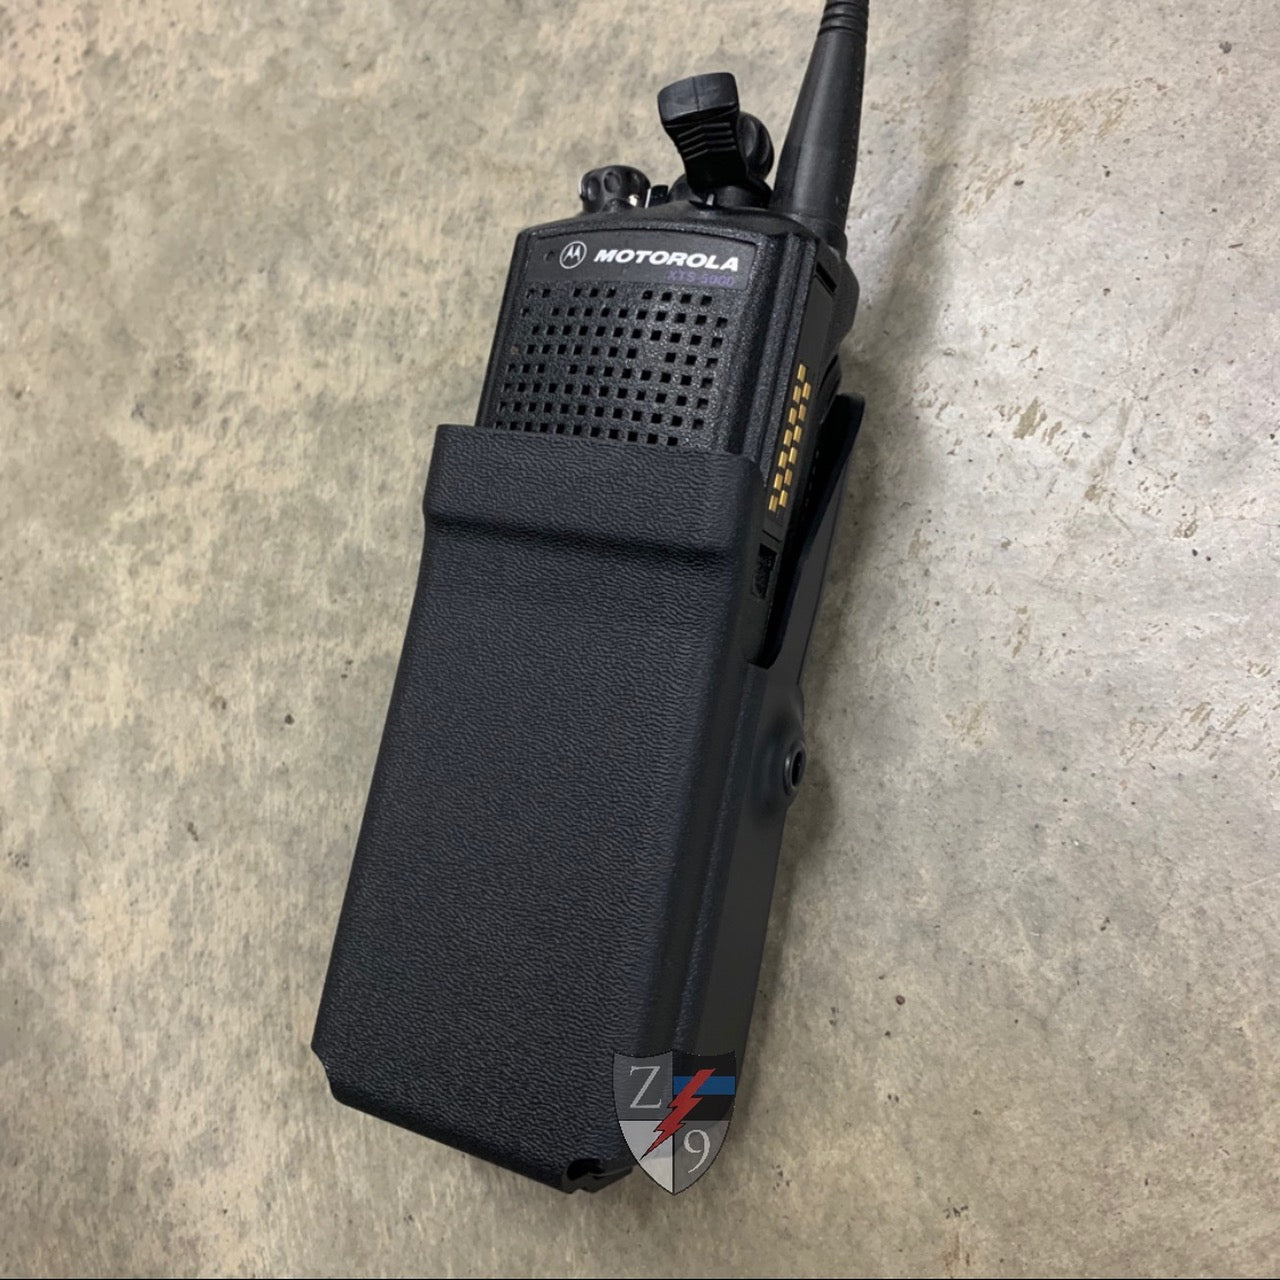 # Portable Radio Case - MOTOROLA XTS and TLK SERIES